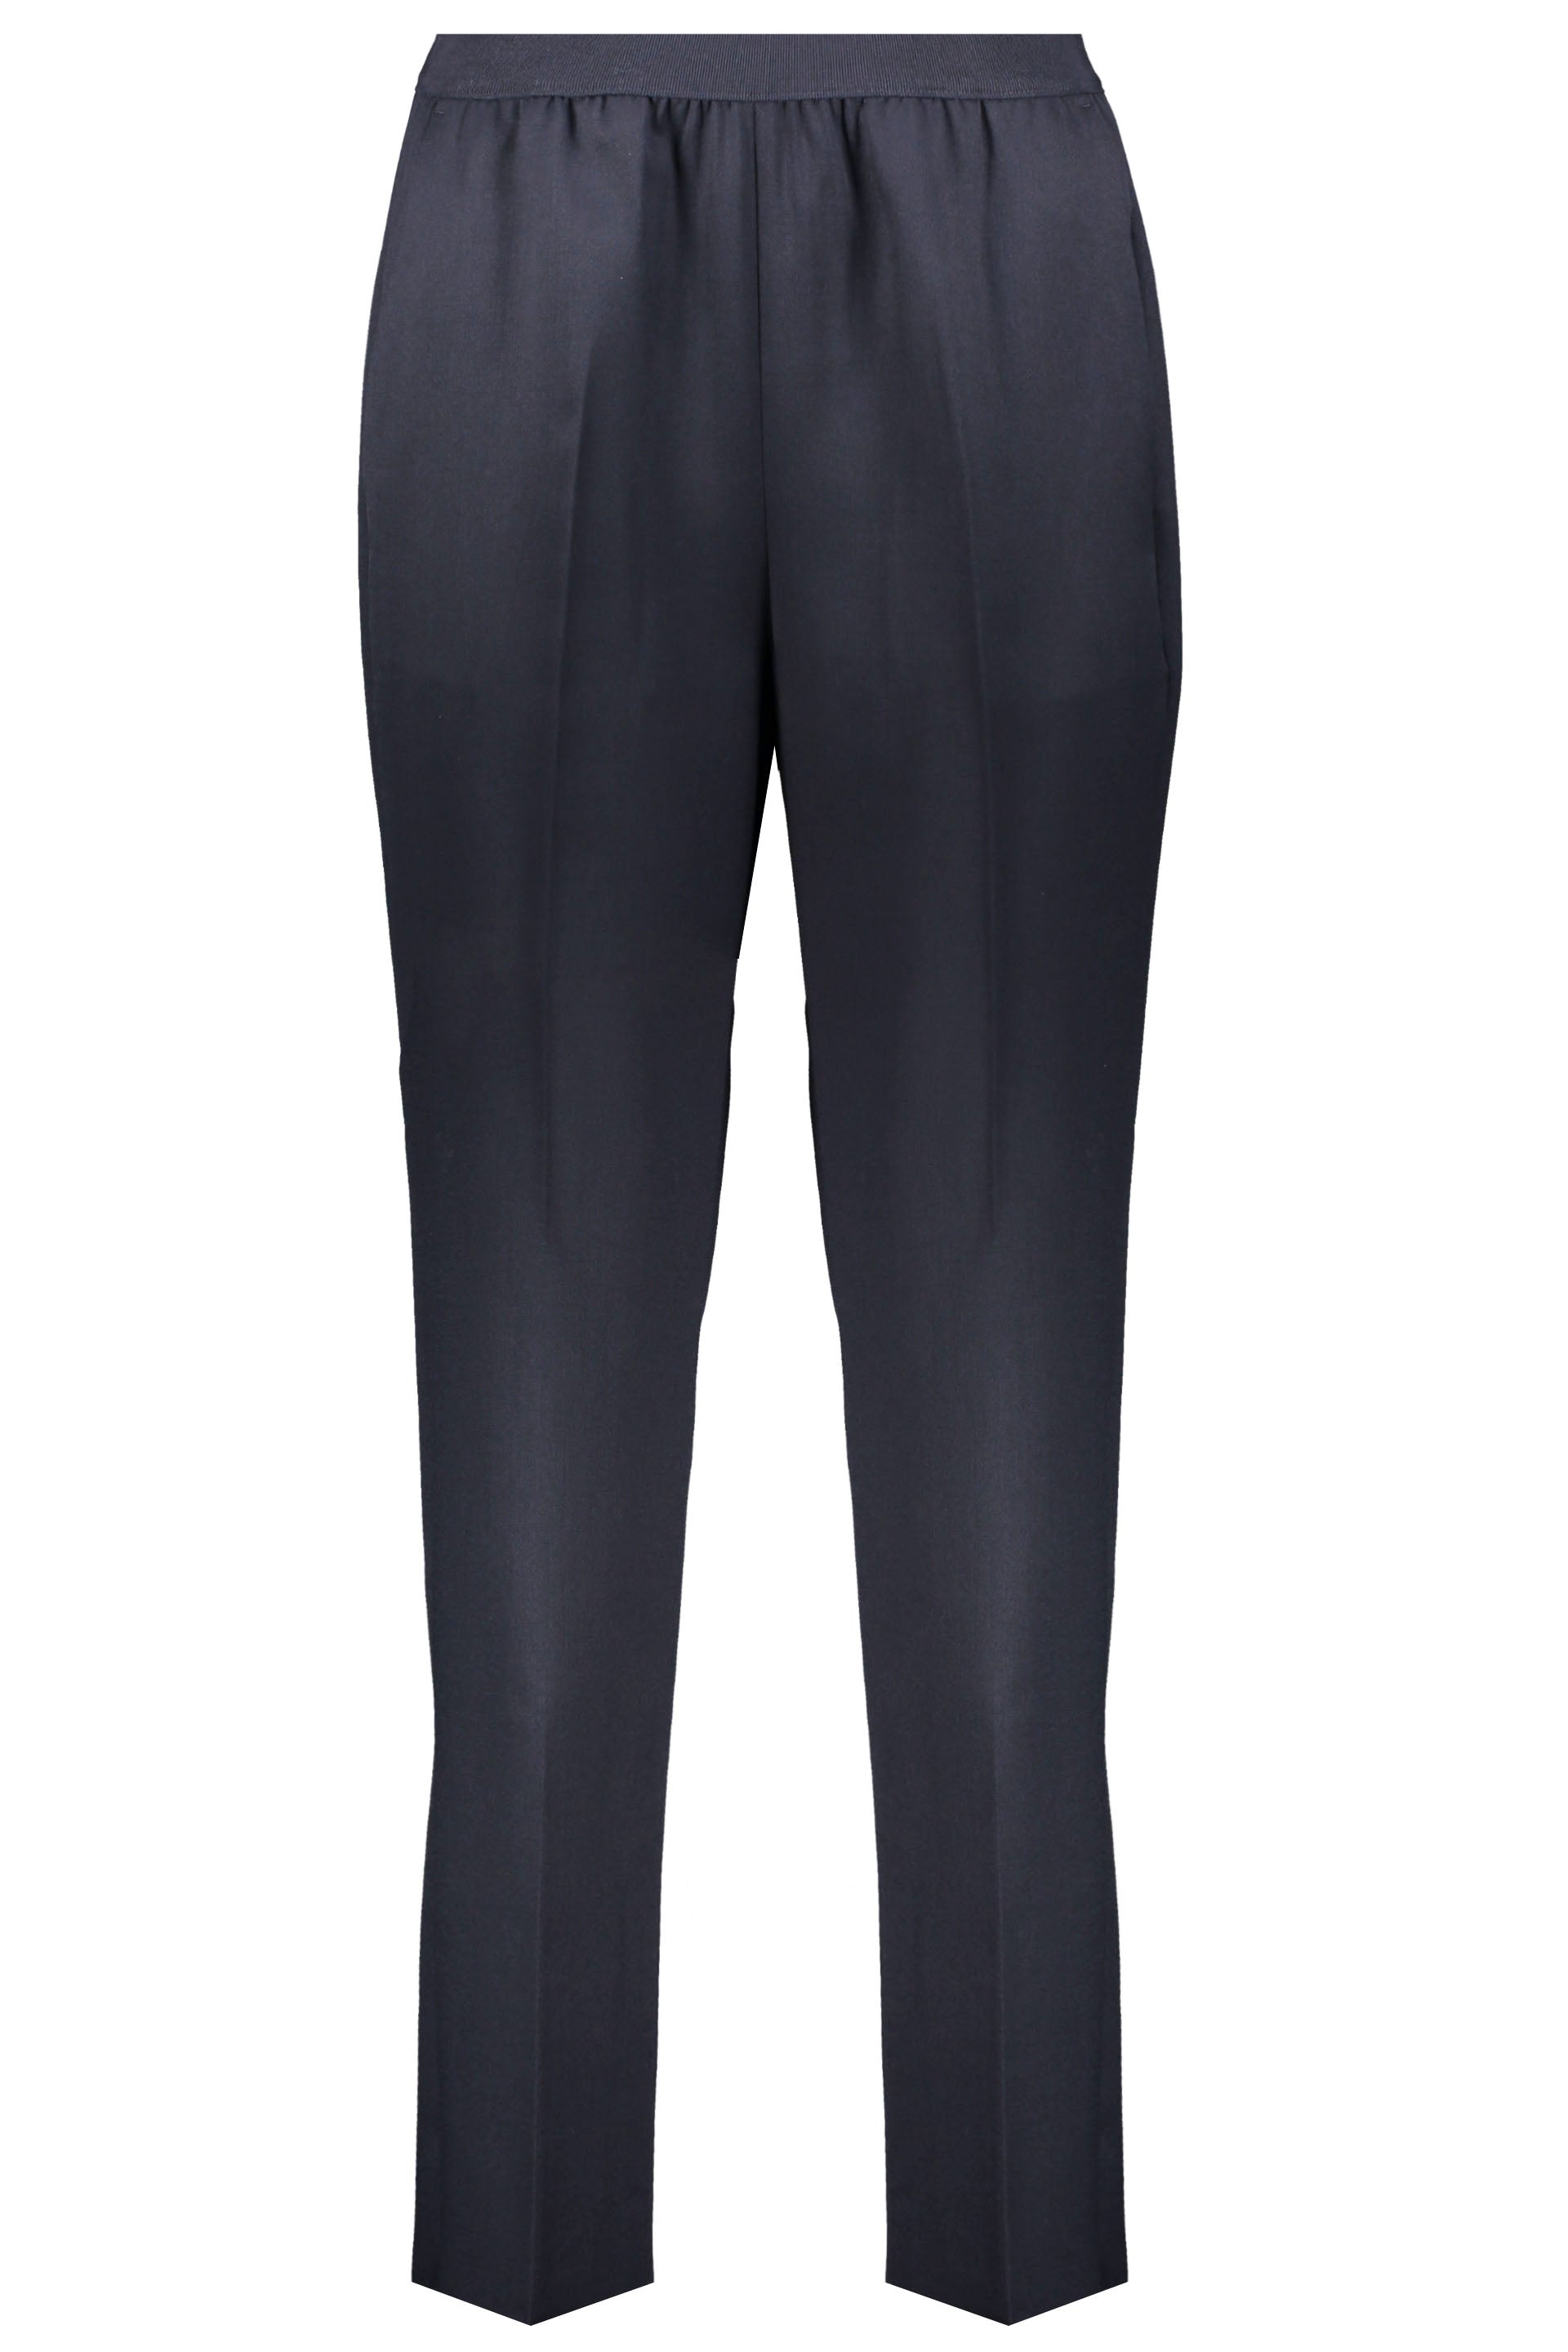 Agnona-OUTLET-SALE-Wool-blend-trousers-Hosen-40-ARCHIVE-COLLECTION.jpg